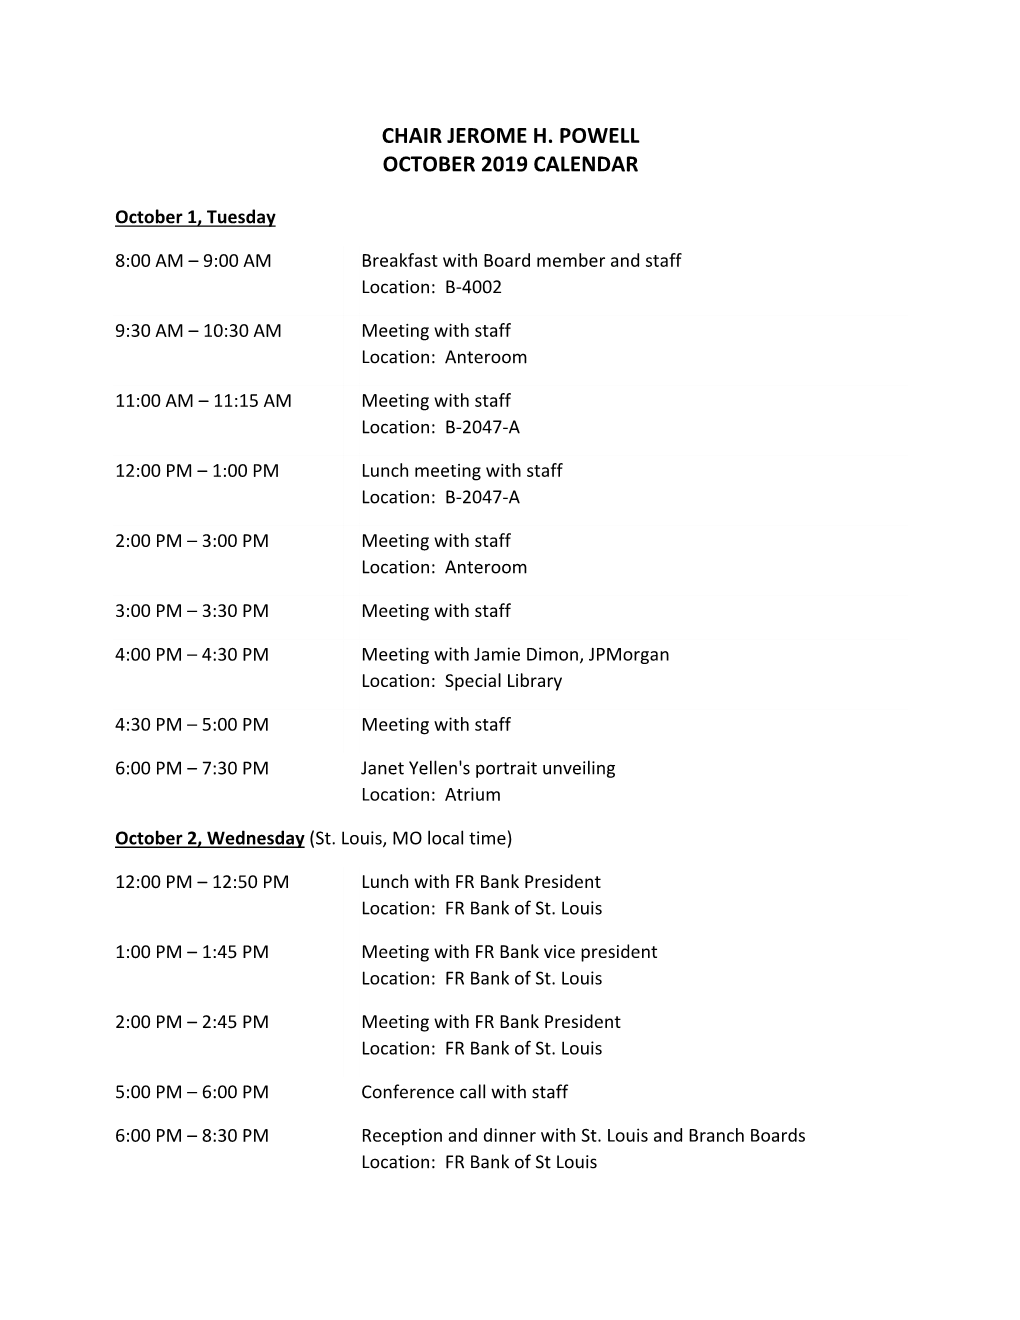 Chair Powell's October 2019 Calendar